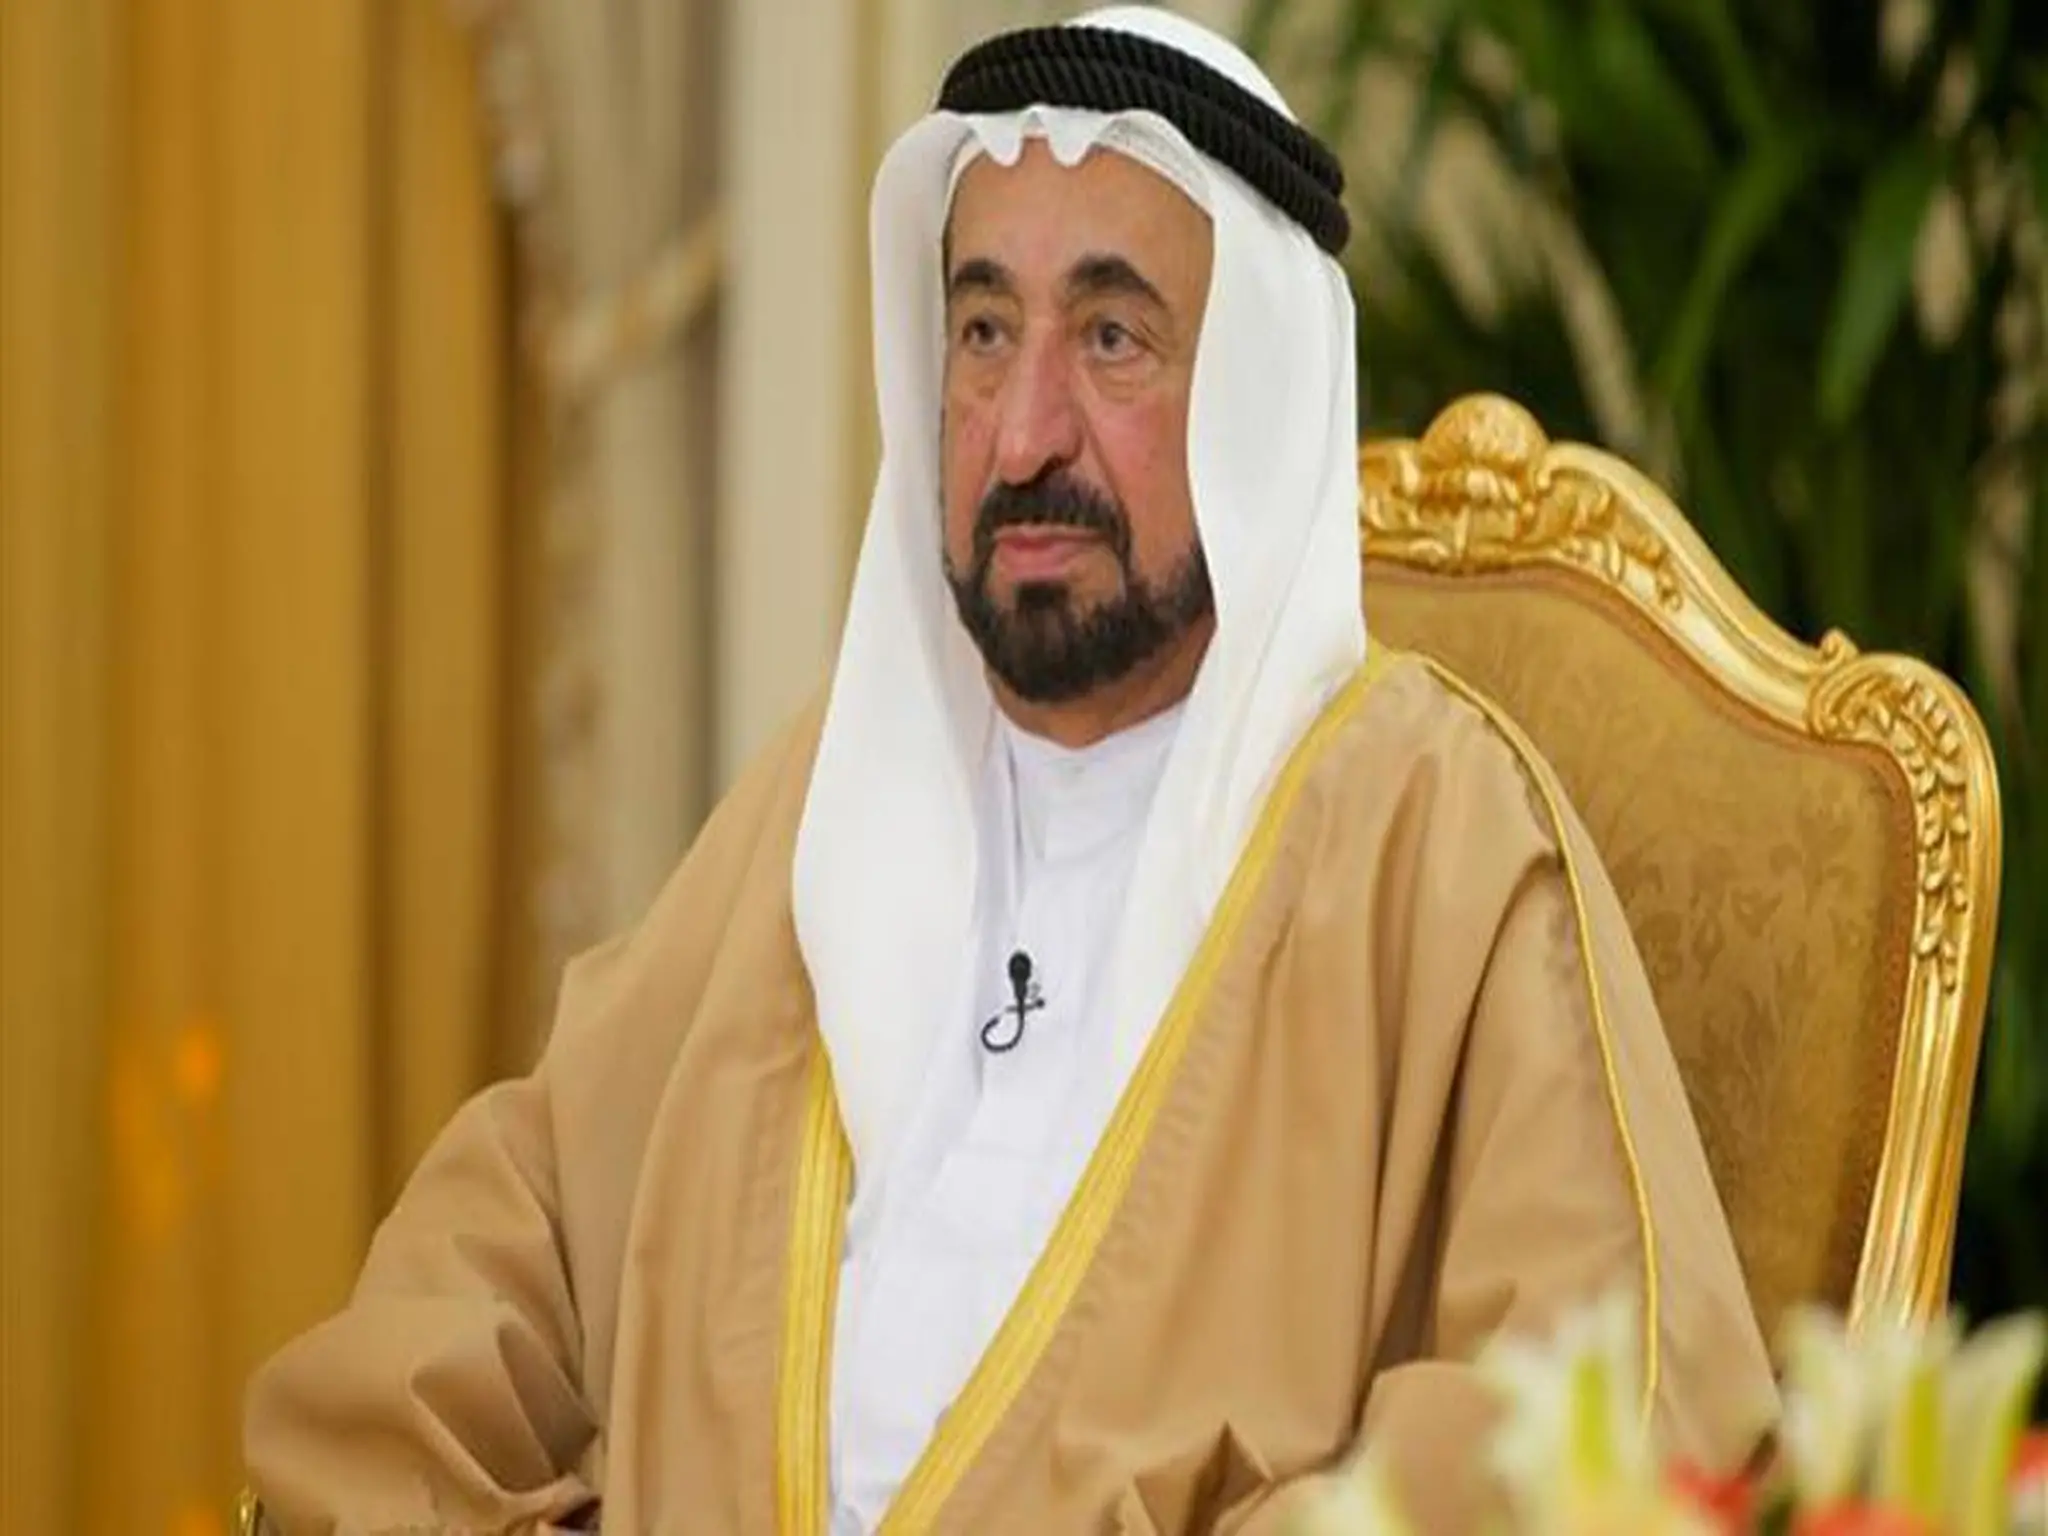 Urgent.. Emiri decree from His Highness Sheikh Sultan Al Qasimi, Ruler of Sharjah